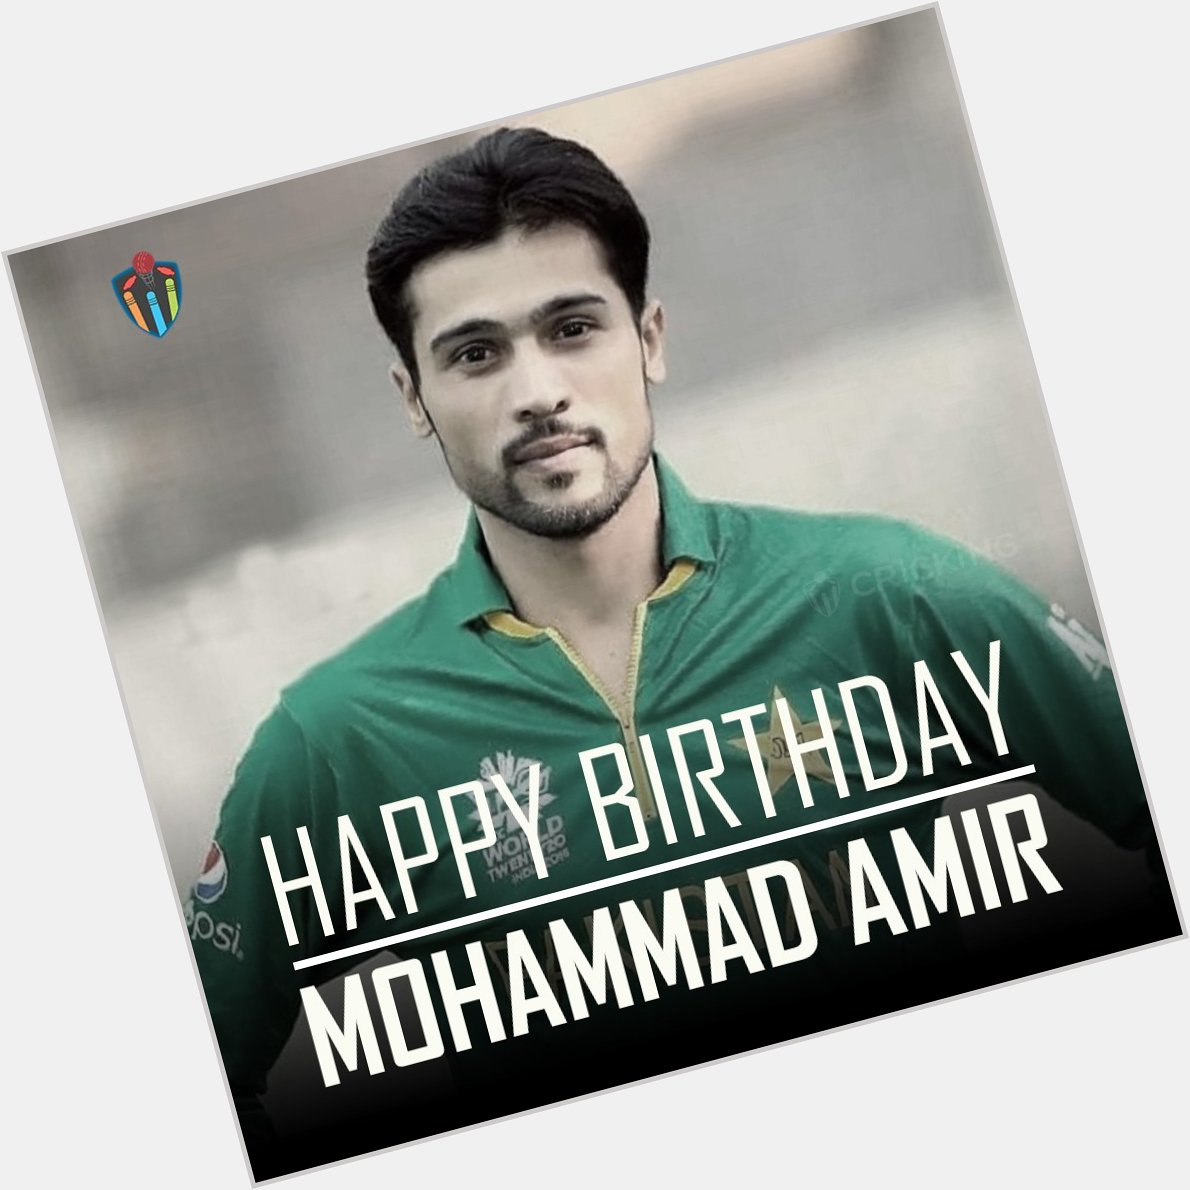 Happy Birthday Mohammad Amir. The Pakistani cricketer turns 25 today. 